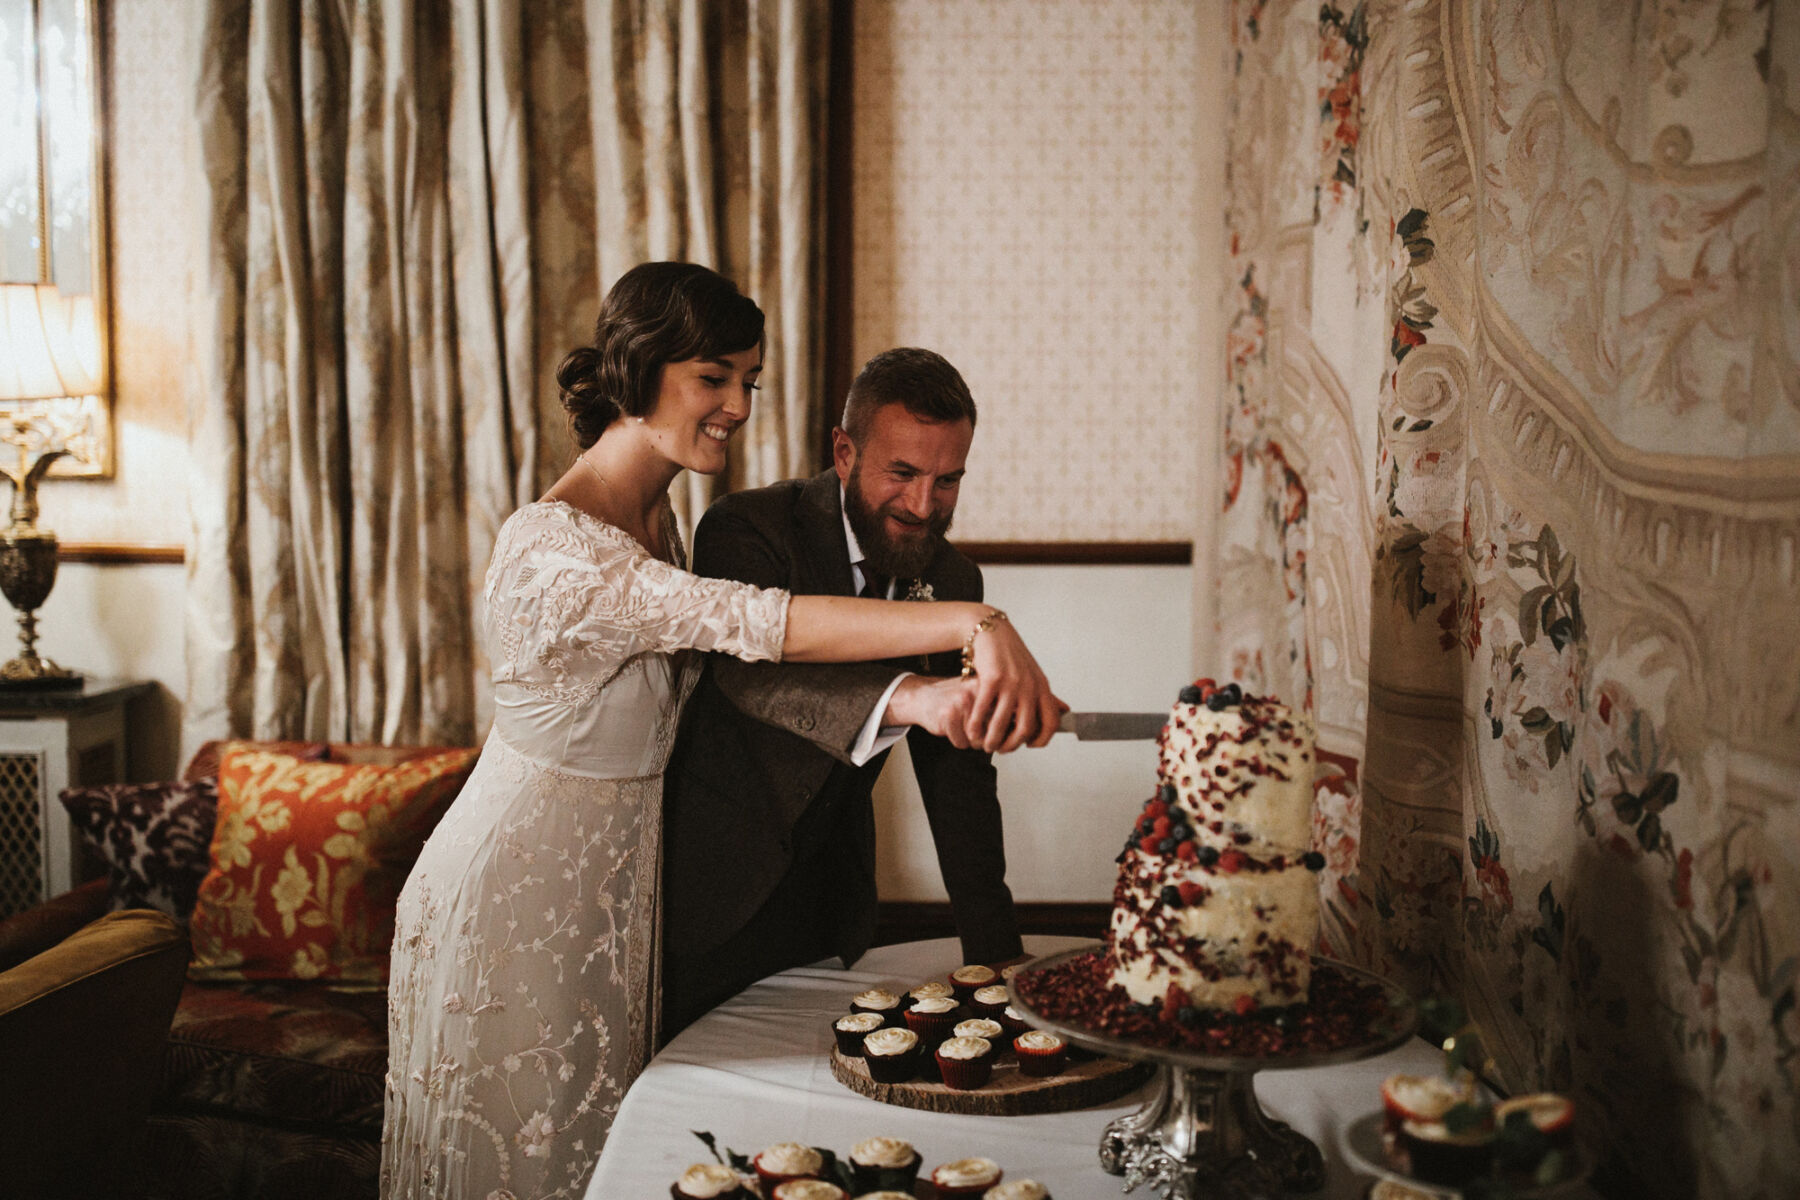 1920s inspired bride in vintage wedding dress cutting the wedding cake.